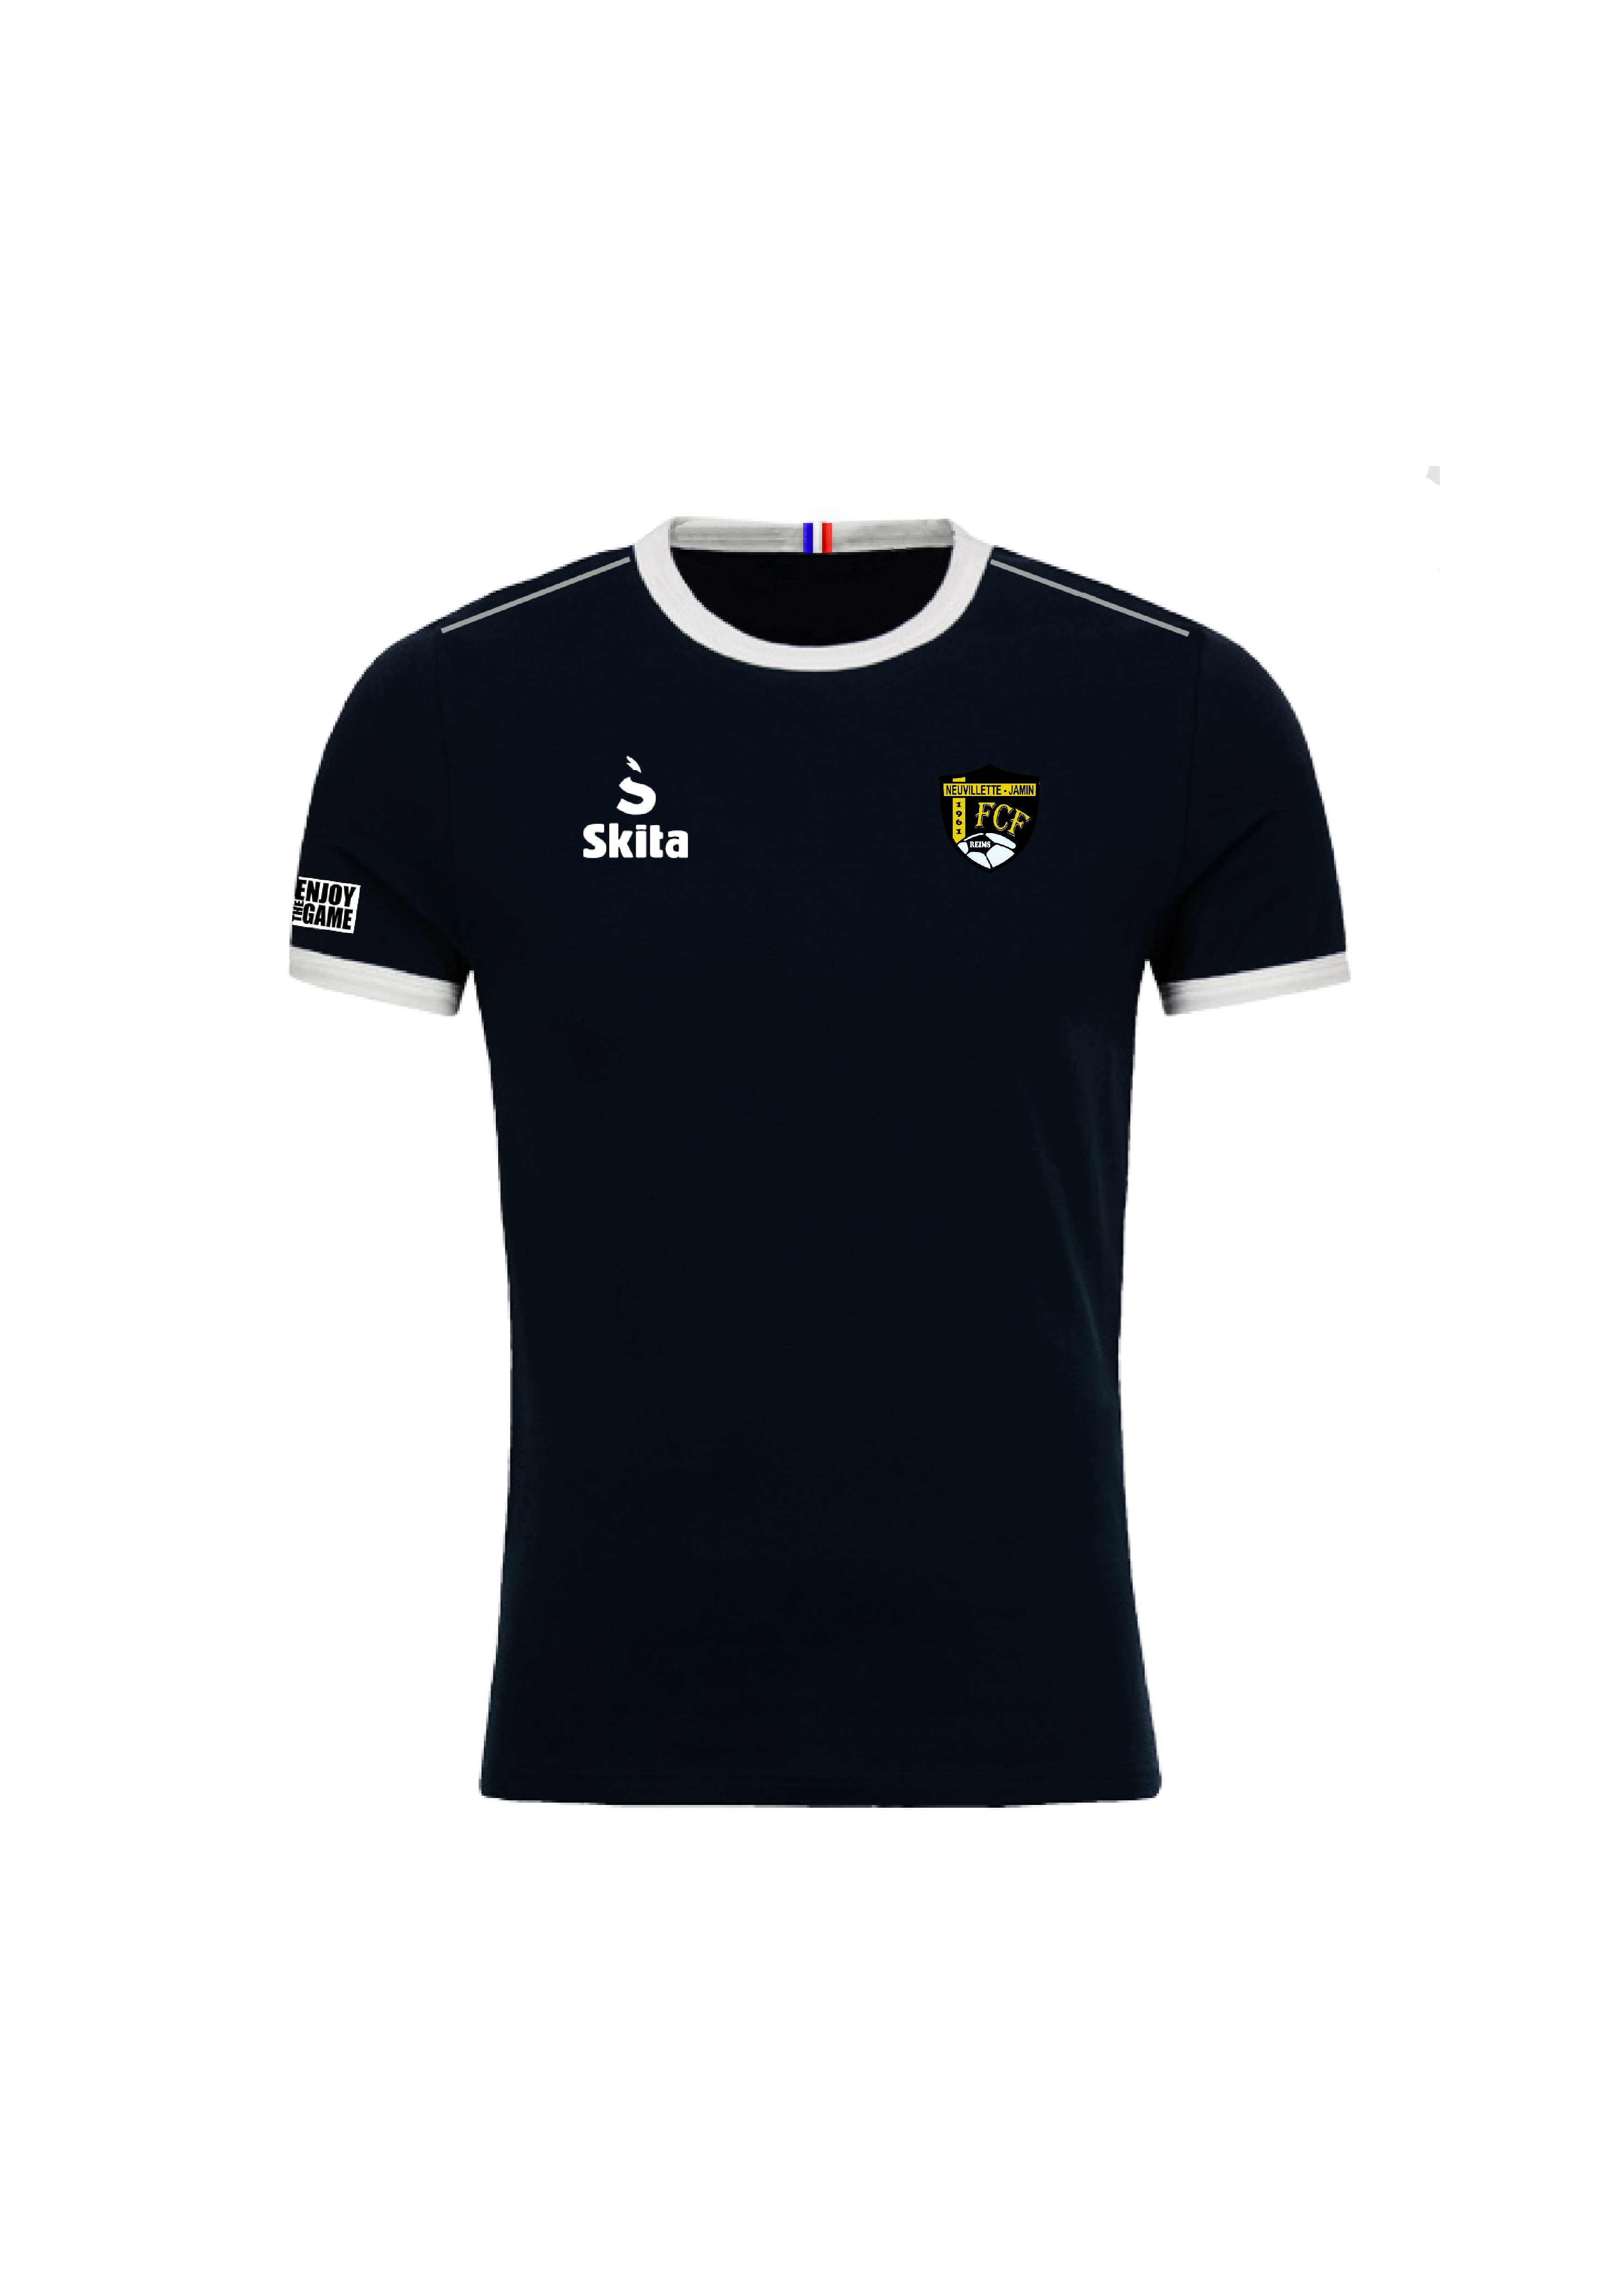 T-shirt de sortie (FCF Reims Neuvillette Jamin)